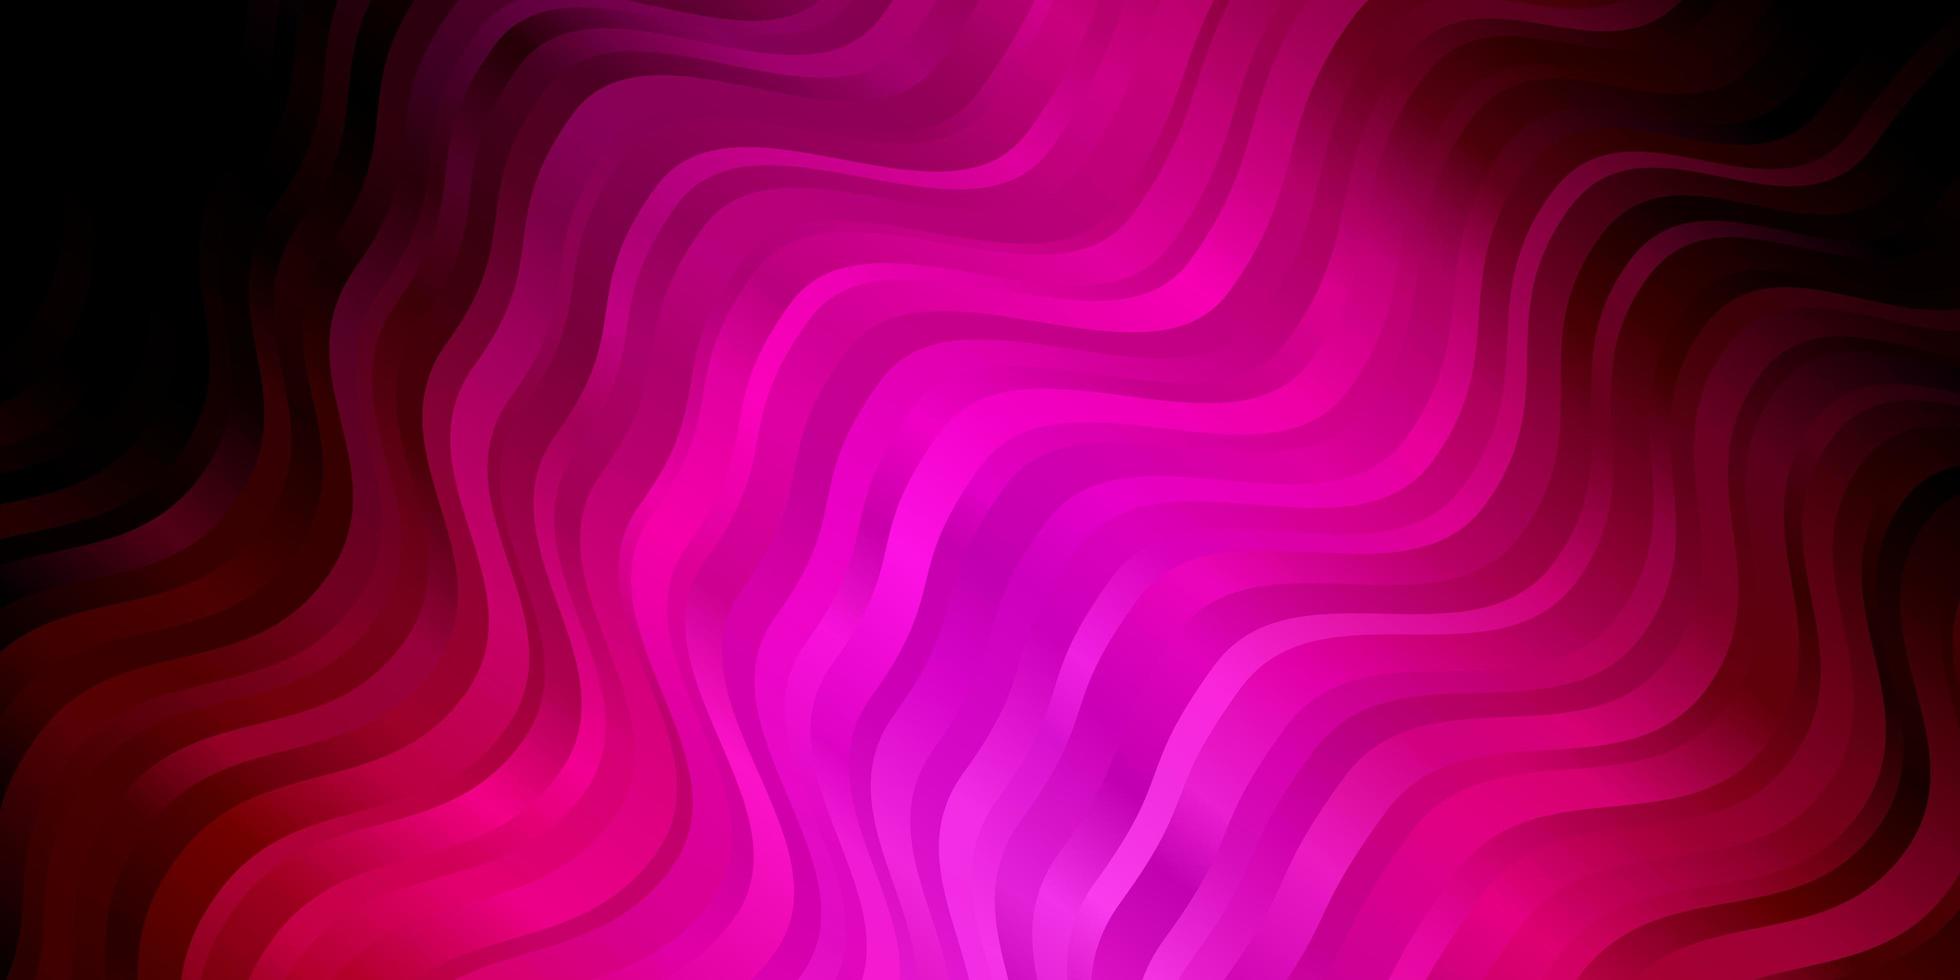 patrón de vector rosa oscuro con líneas curvas.